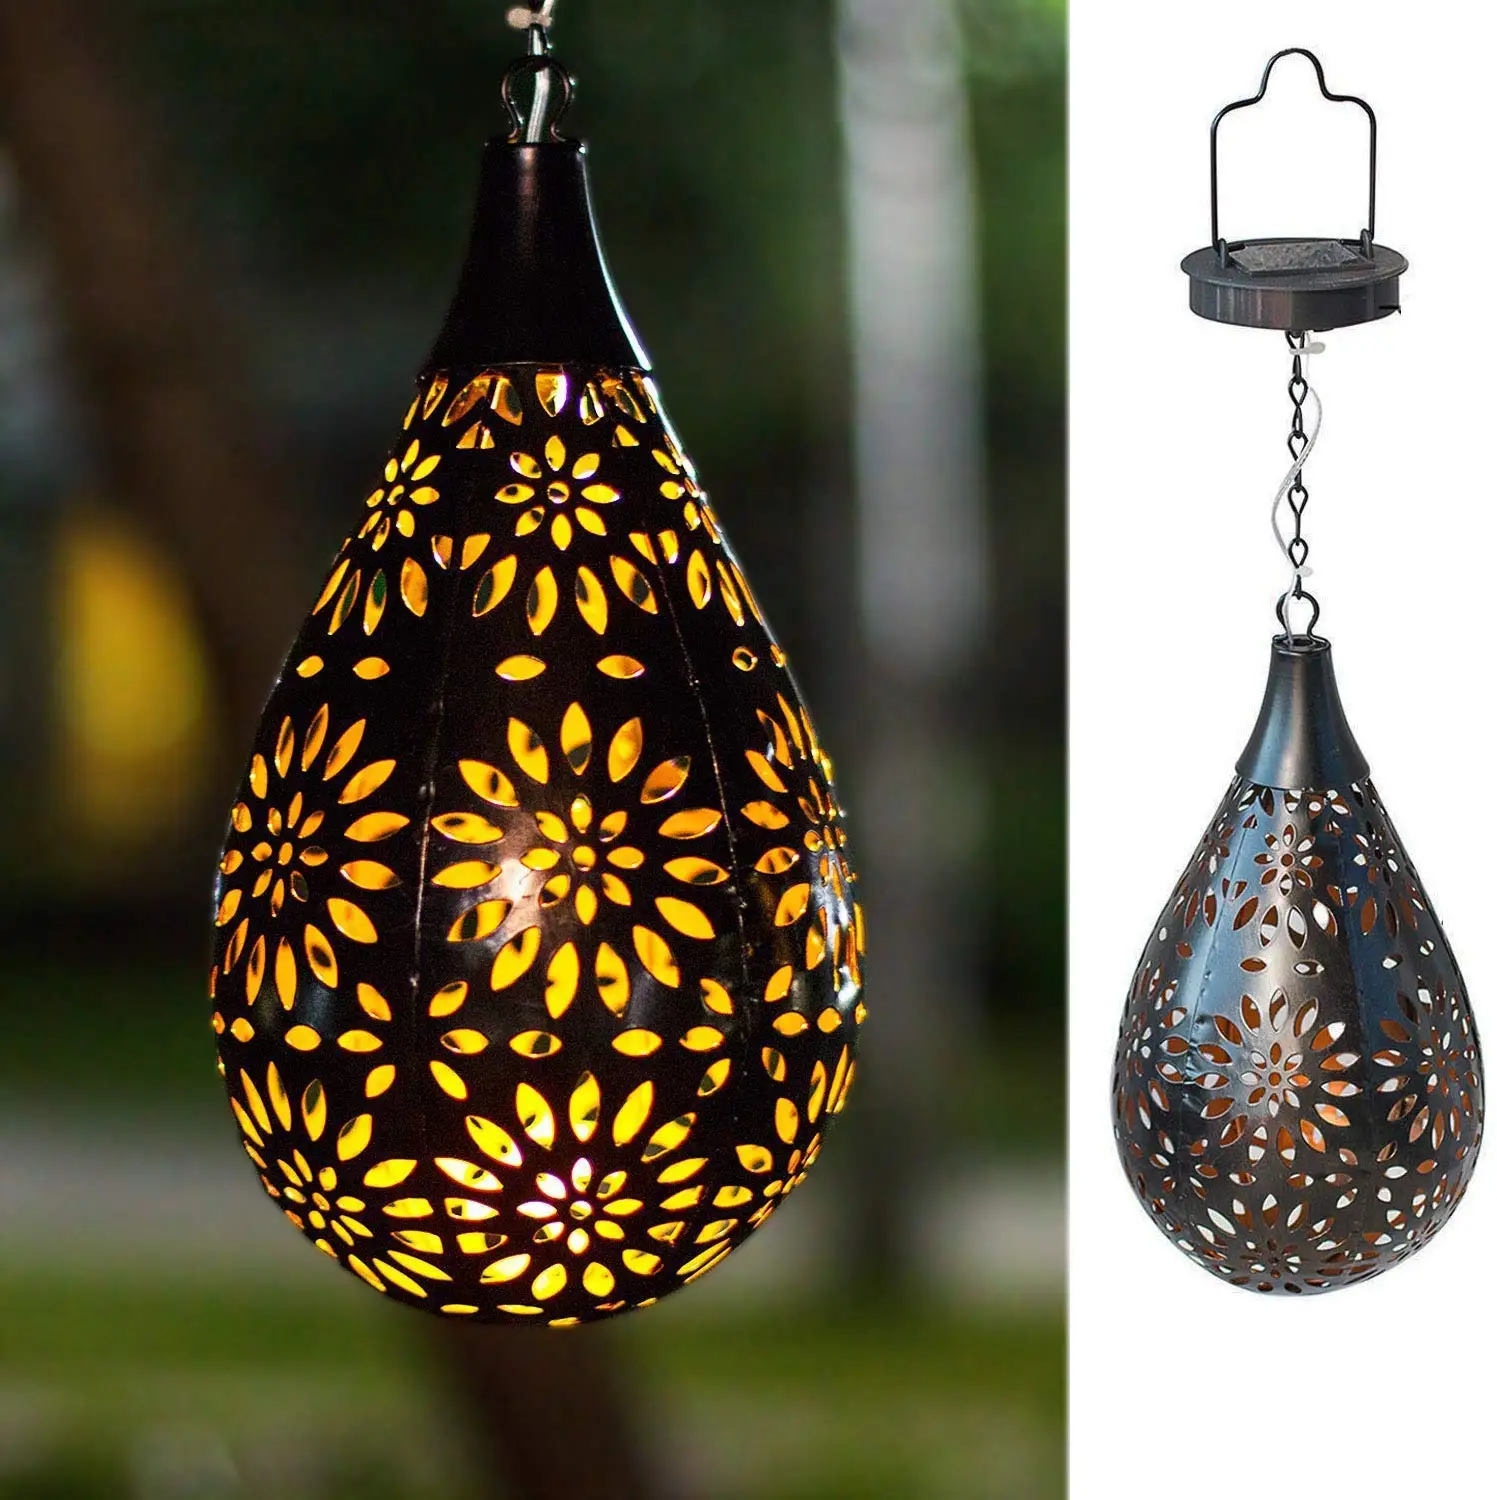 Outdoor Garden Hanging Bulb Shaped Solar Light for Decoration